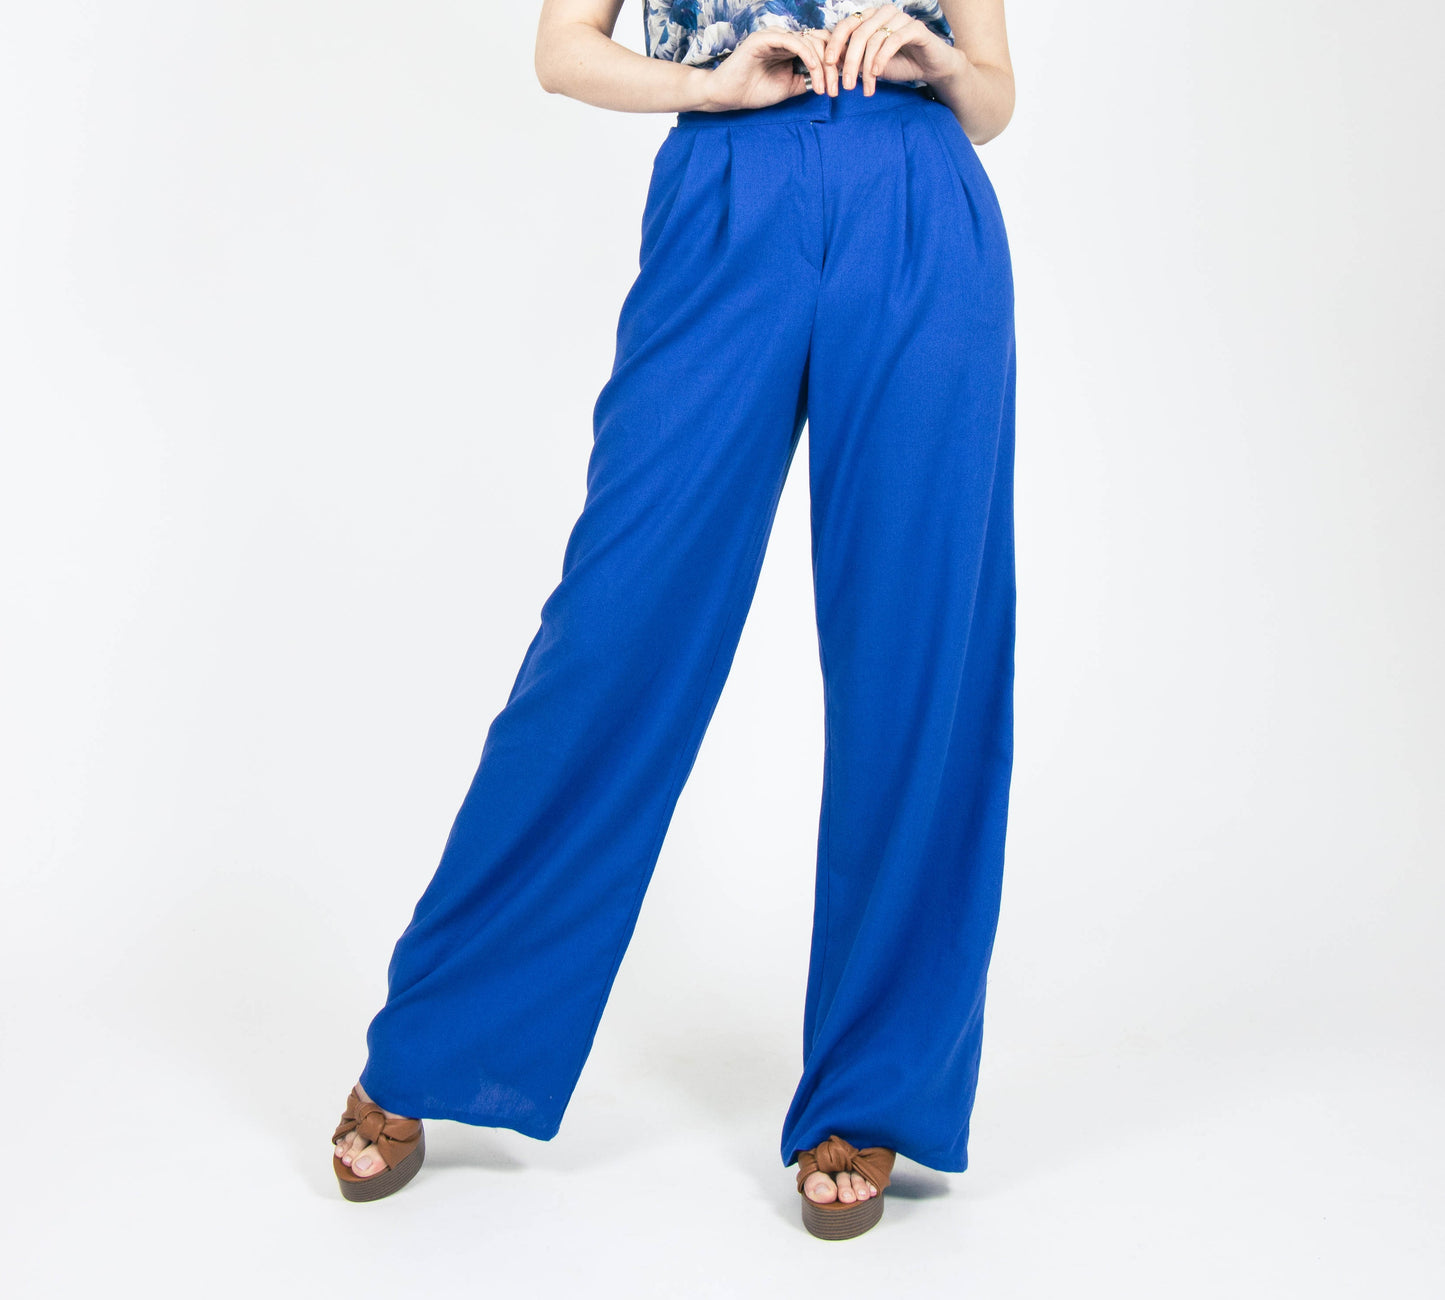 blue wide leg vintage style trousers 70s fashion